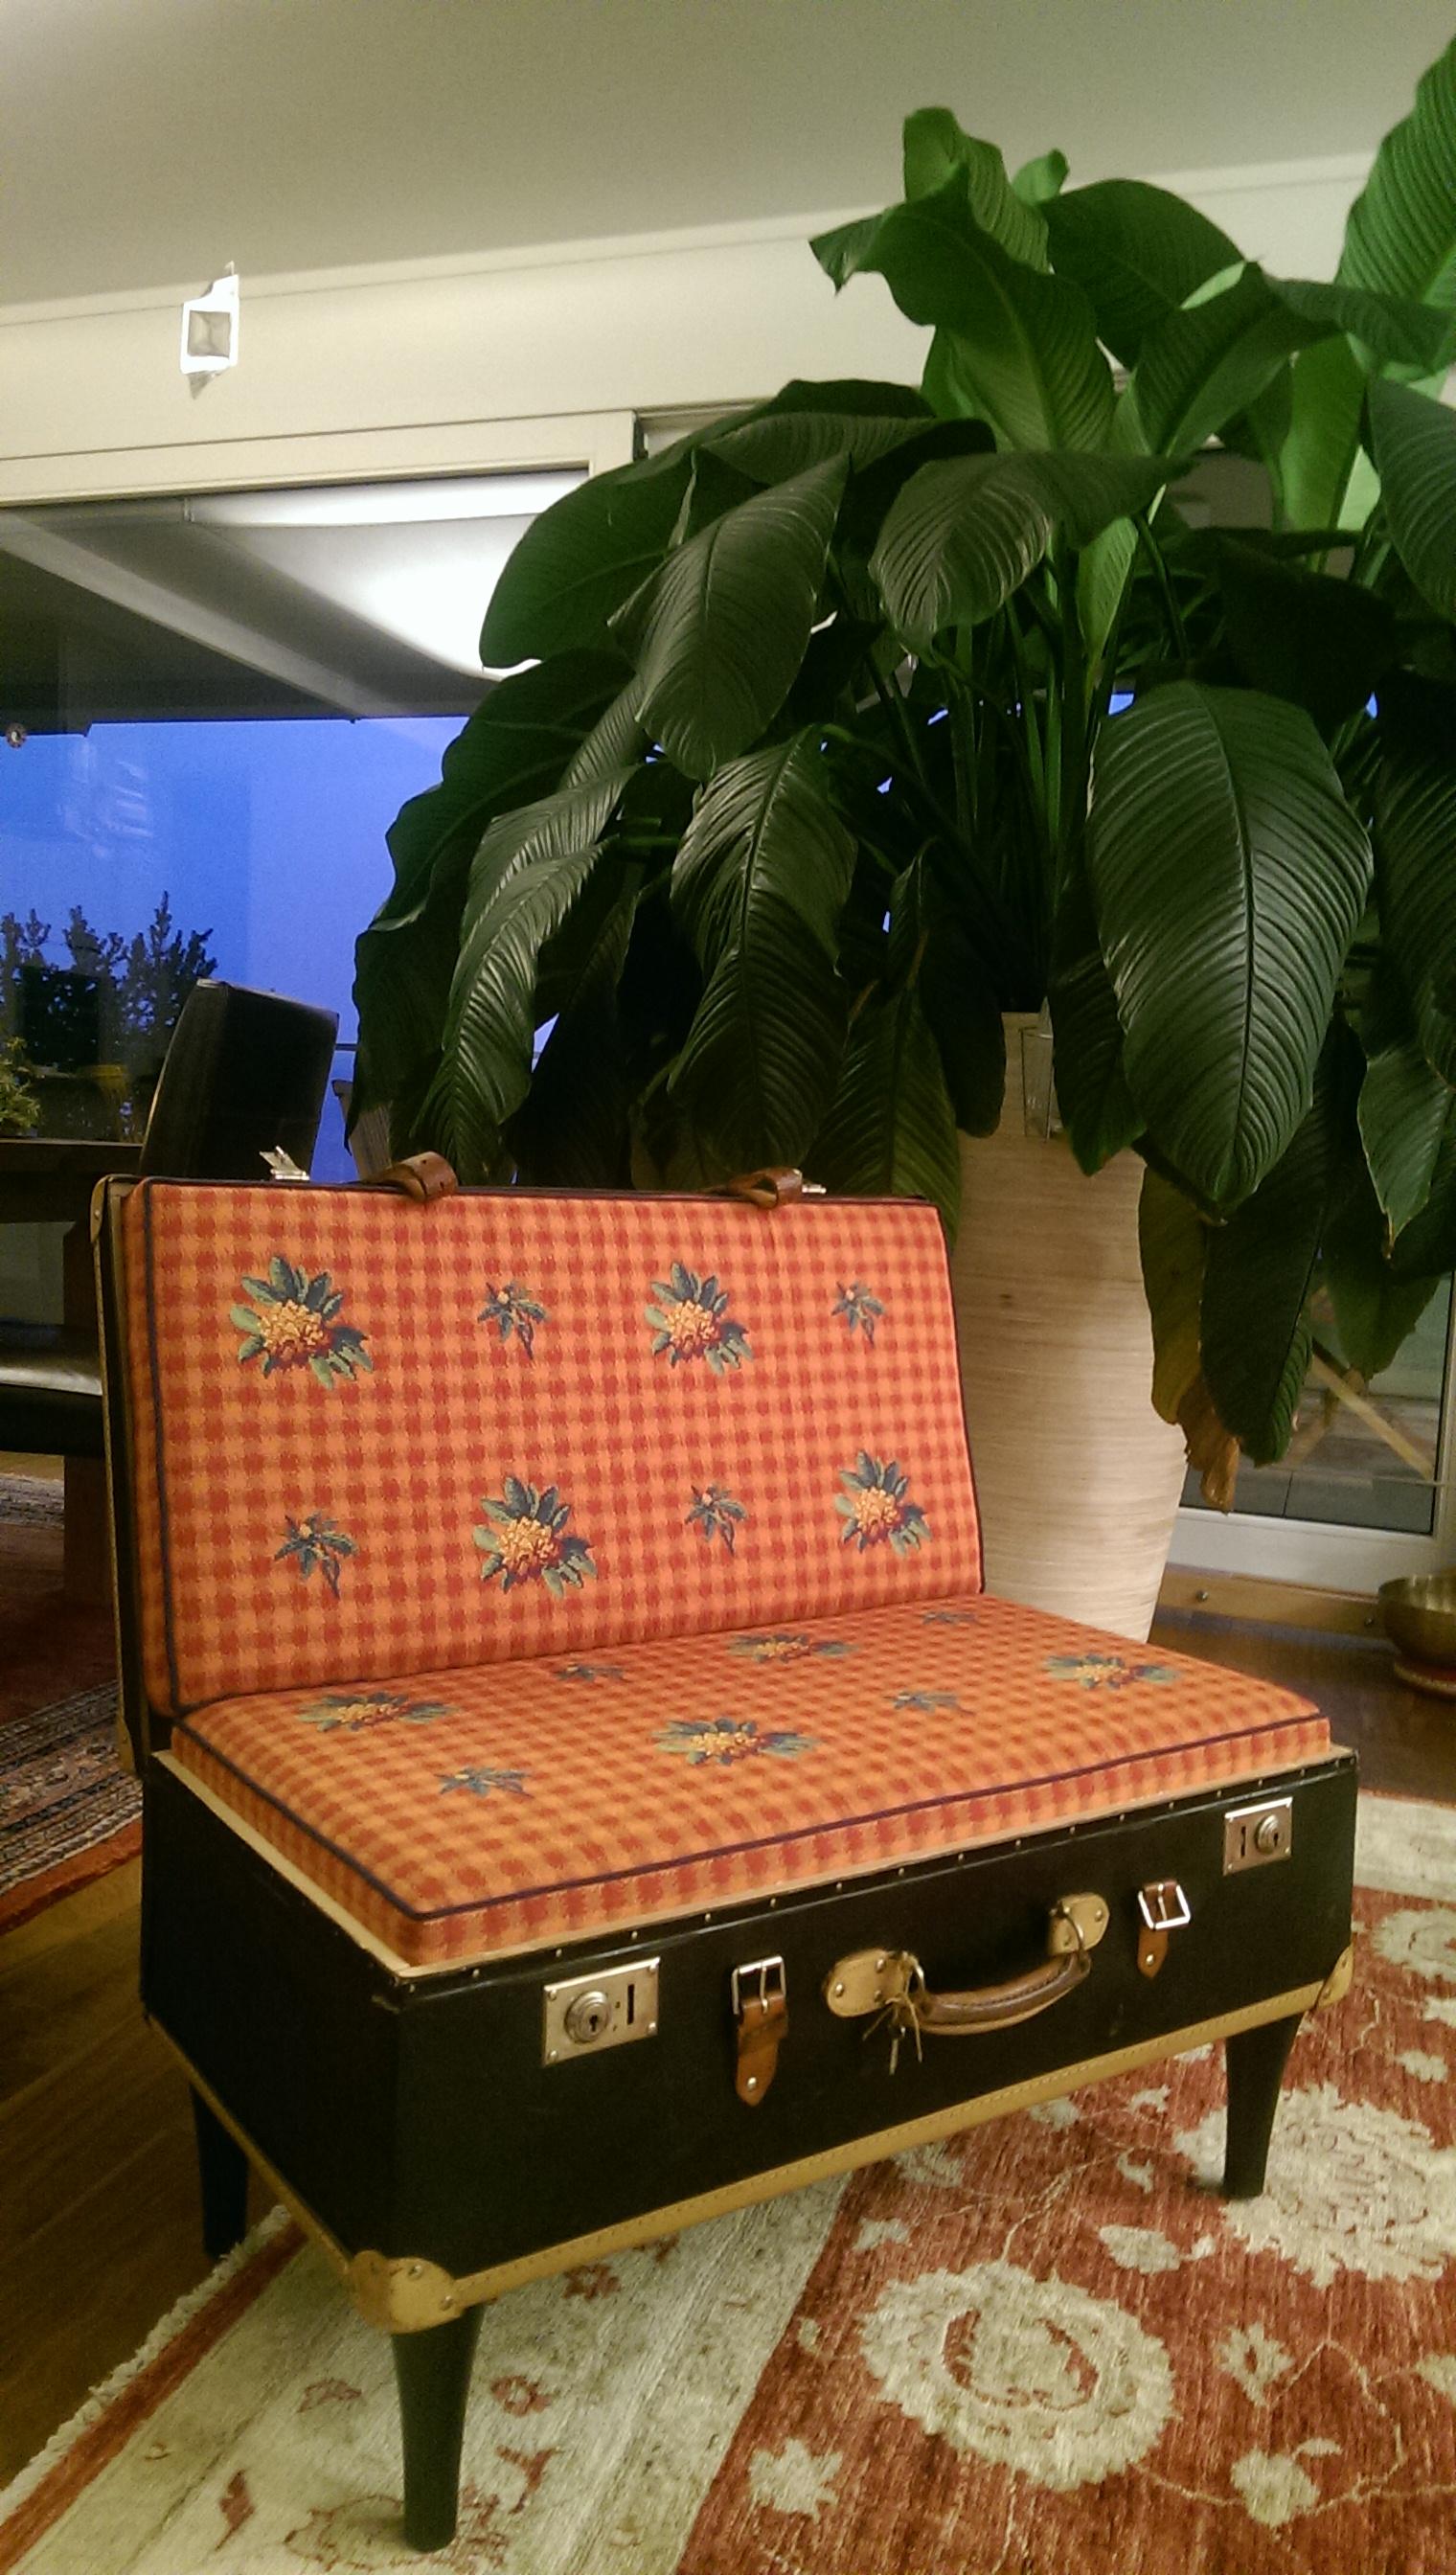 Kofferstuhl "Edelweiss" in seiner neuen Umgebung #koffer #handarbeit ©IUNICUM GmbH